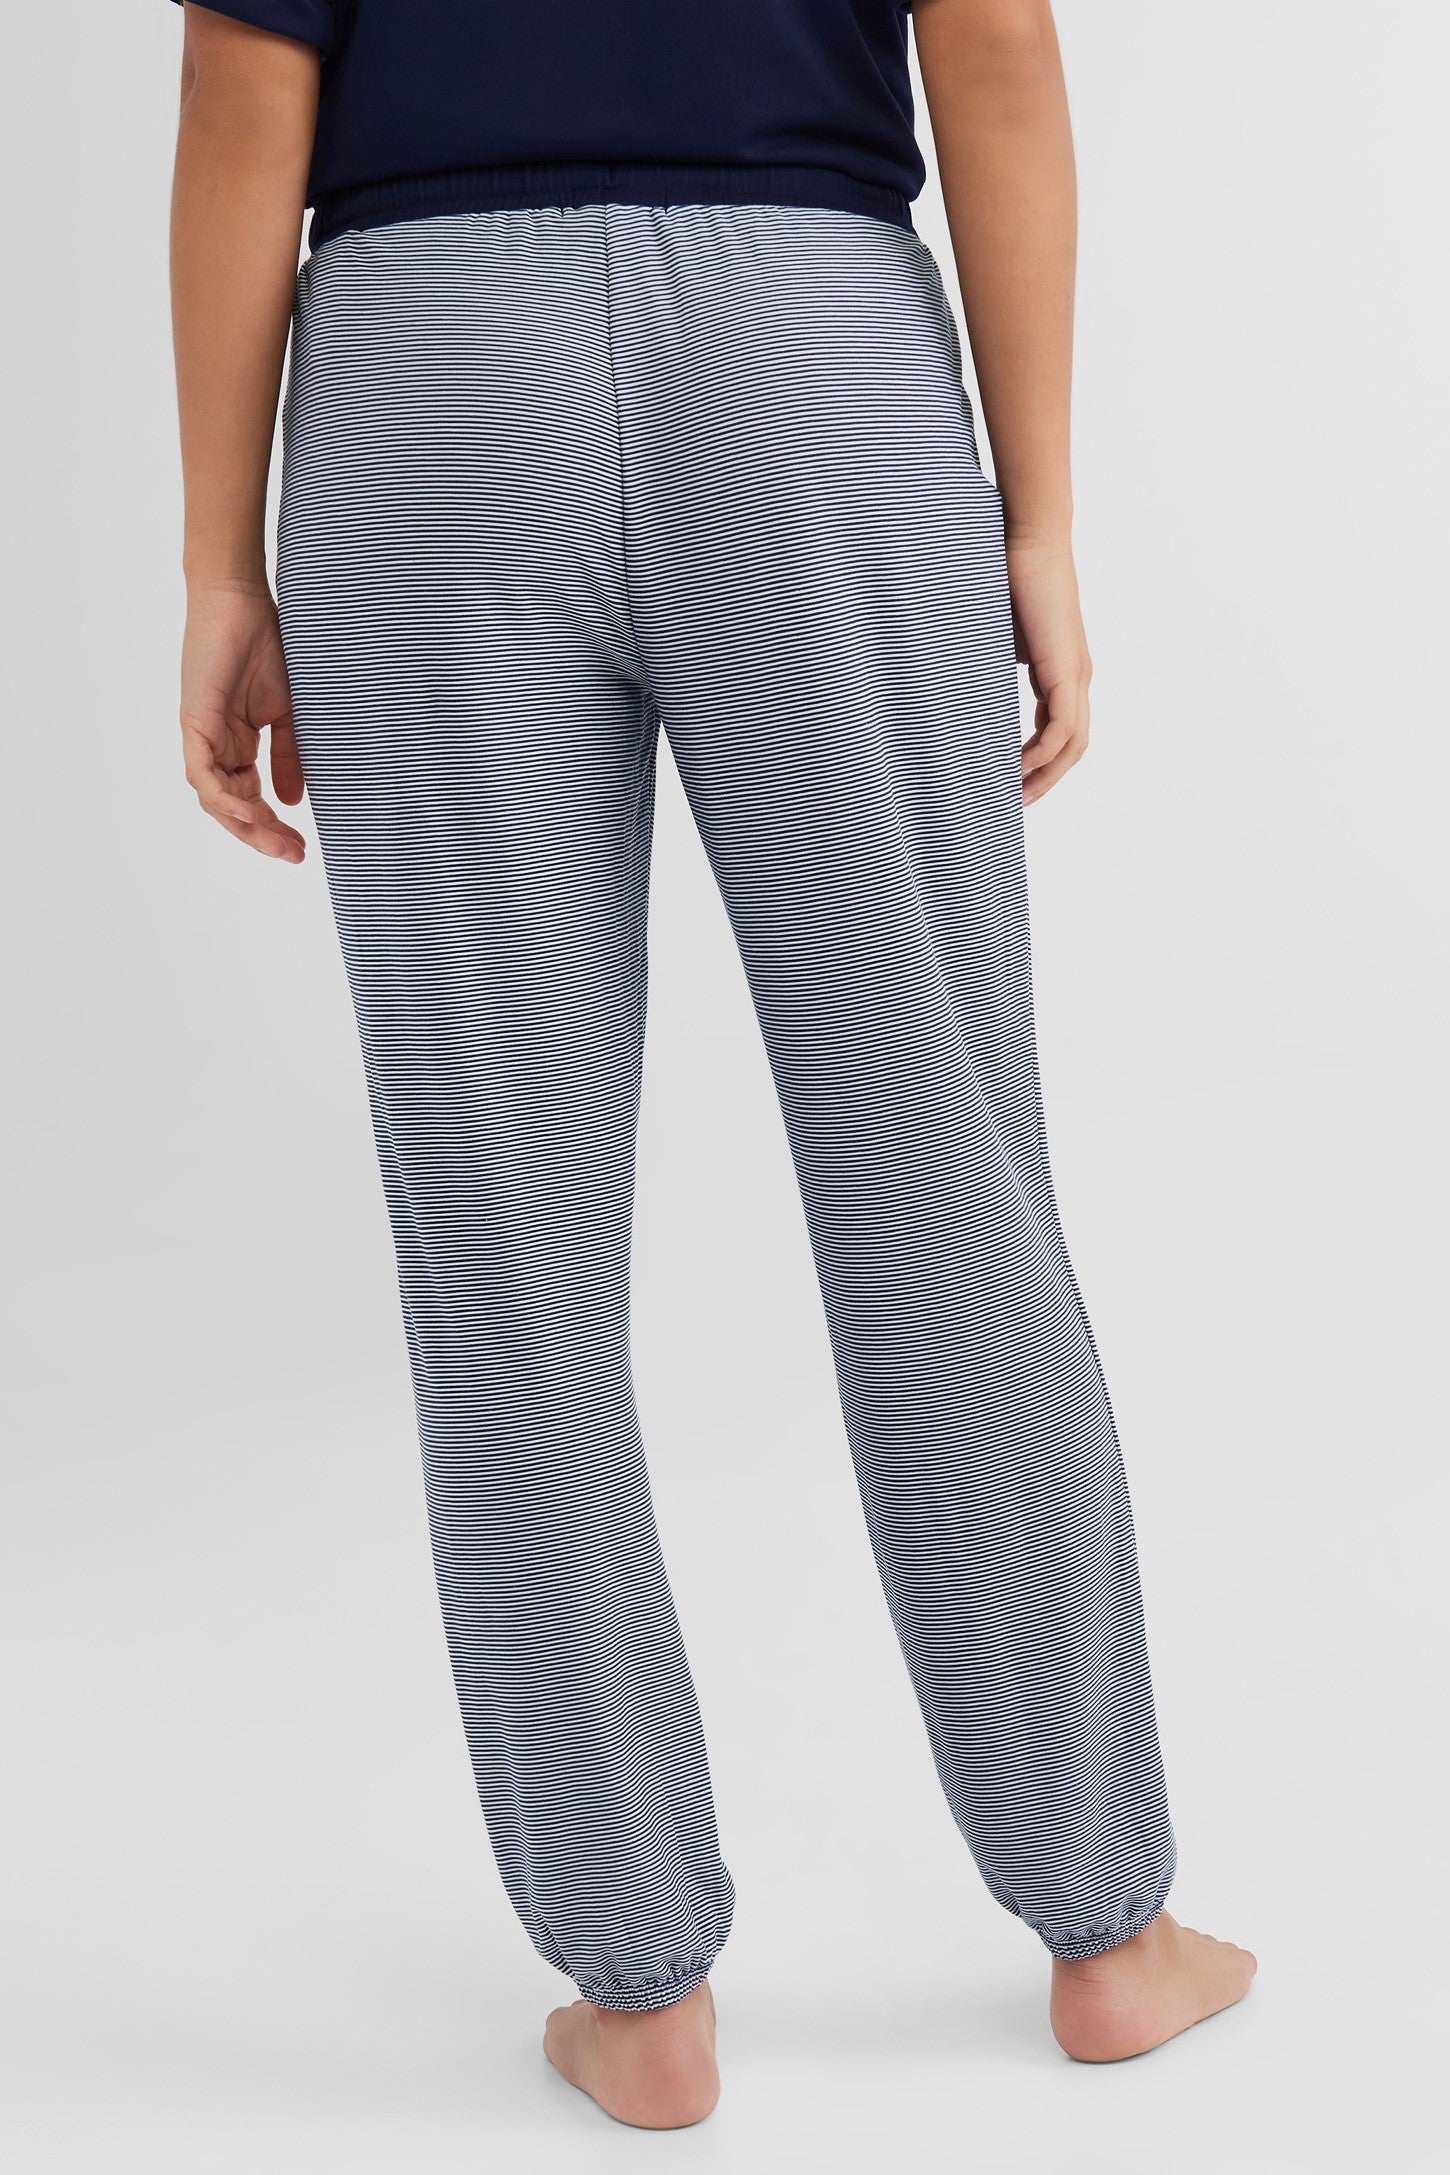 Pantalon jogger pyjama - Femme && BLANC/GRIS